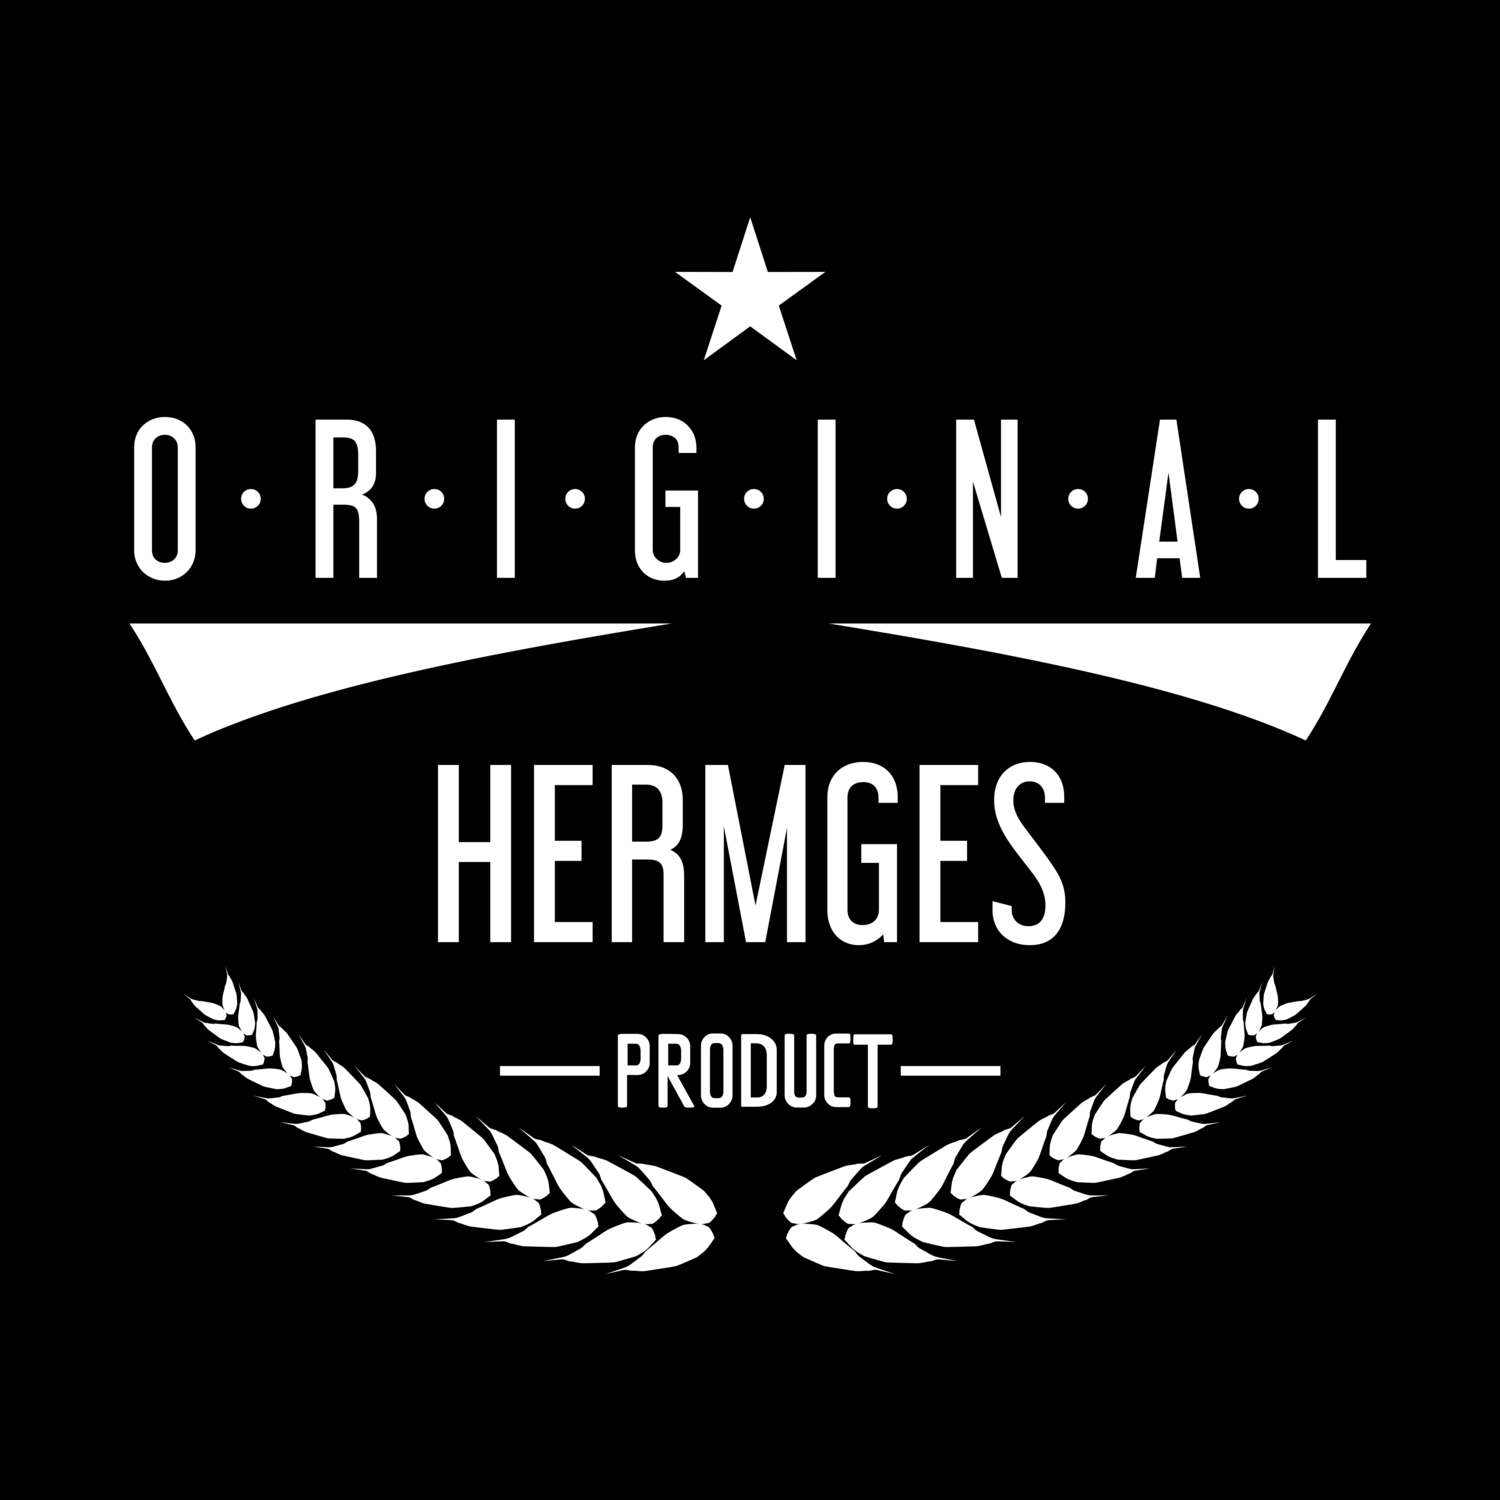 Hermges T-Shirt »Original Product«